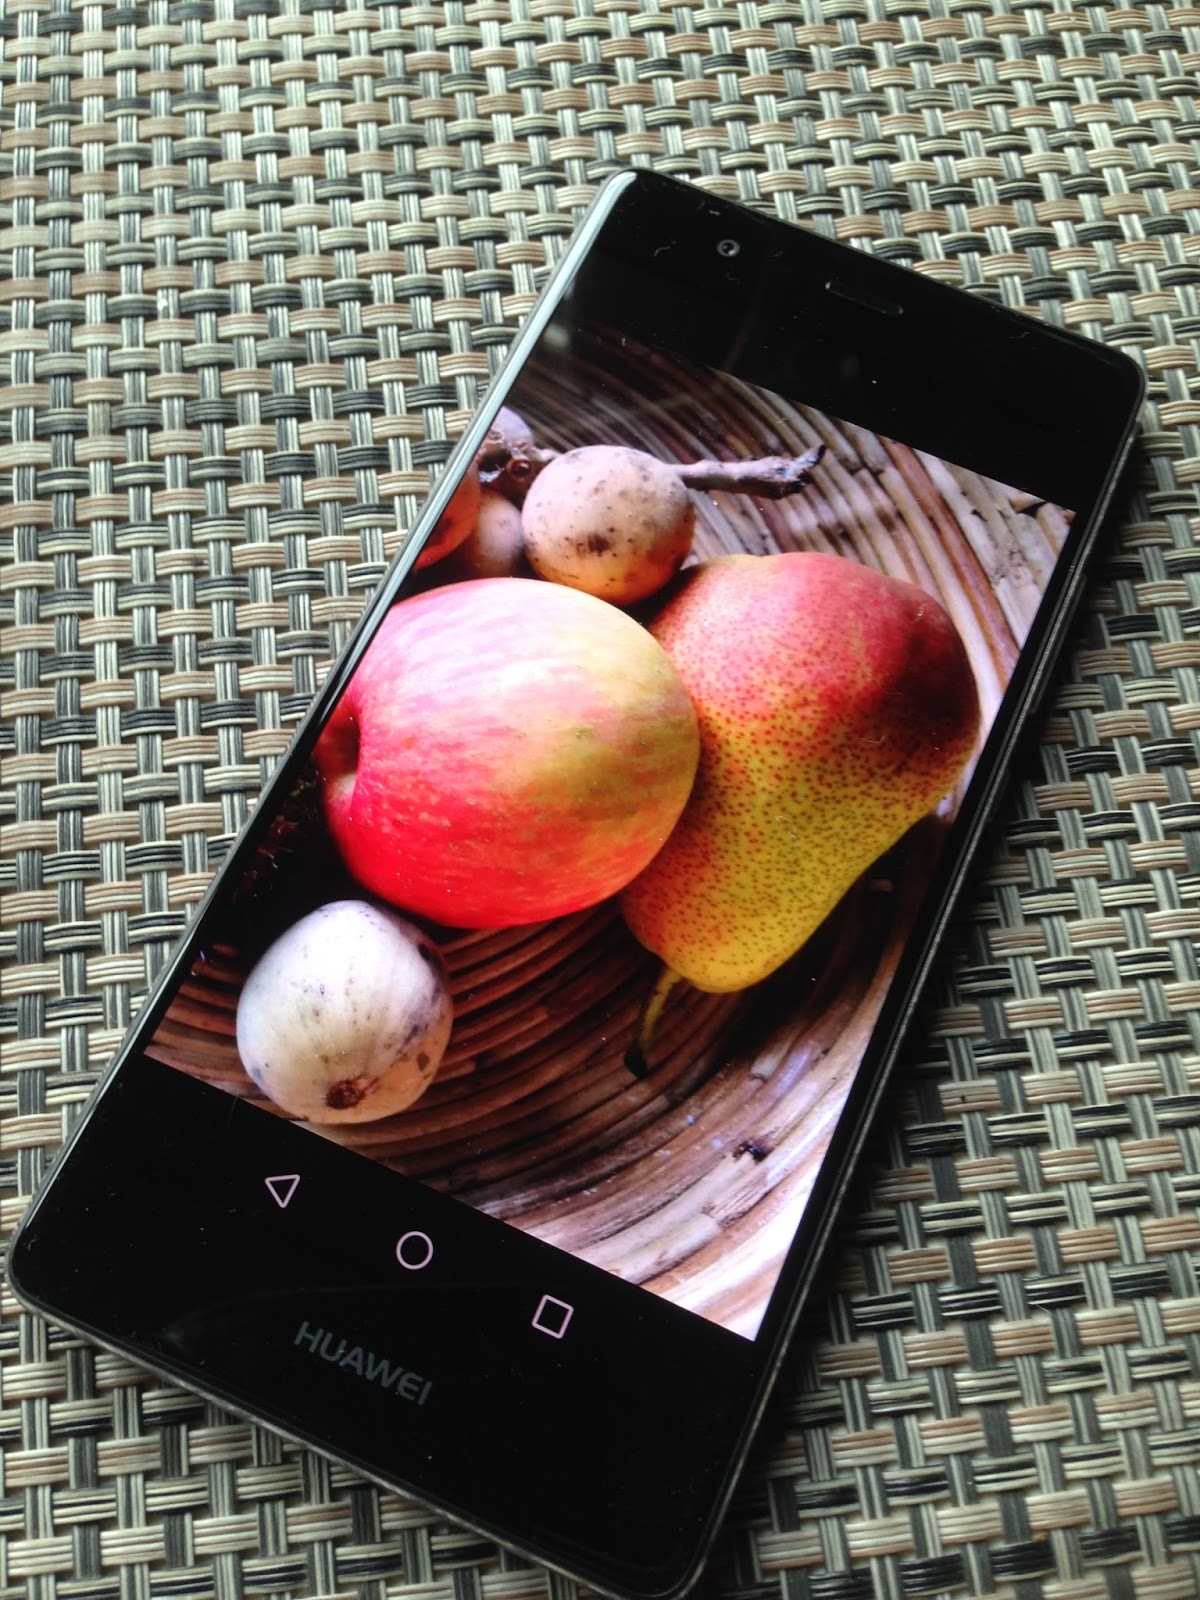 Cantik Nyer Gambar Dengan Telefon Pintar Huawei P9 - Azie 